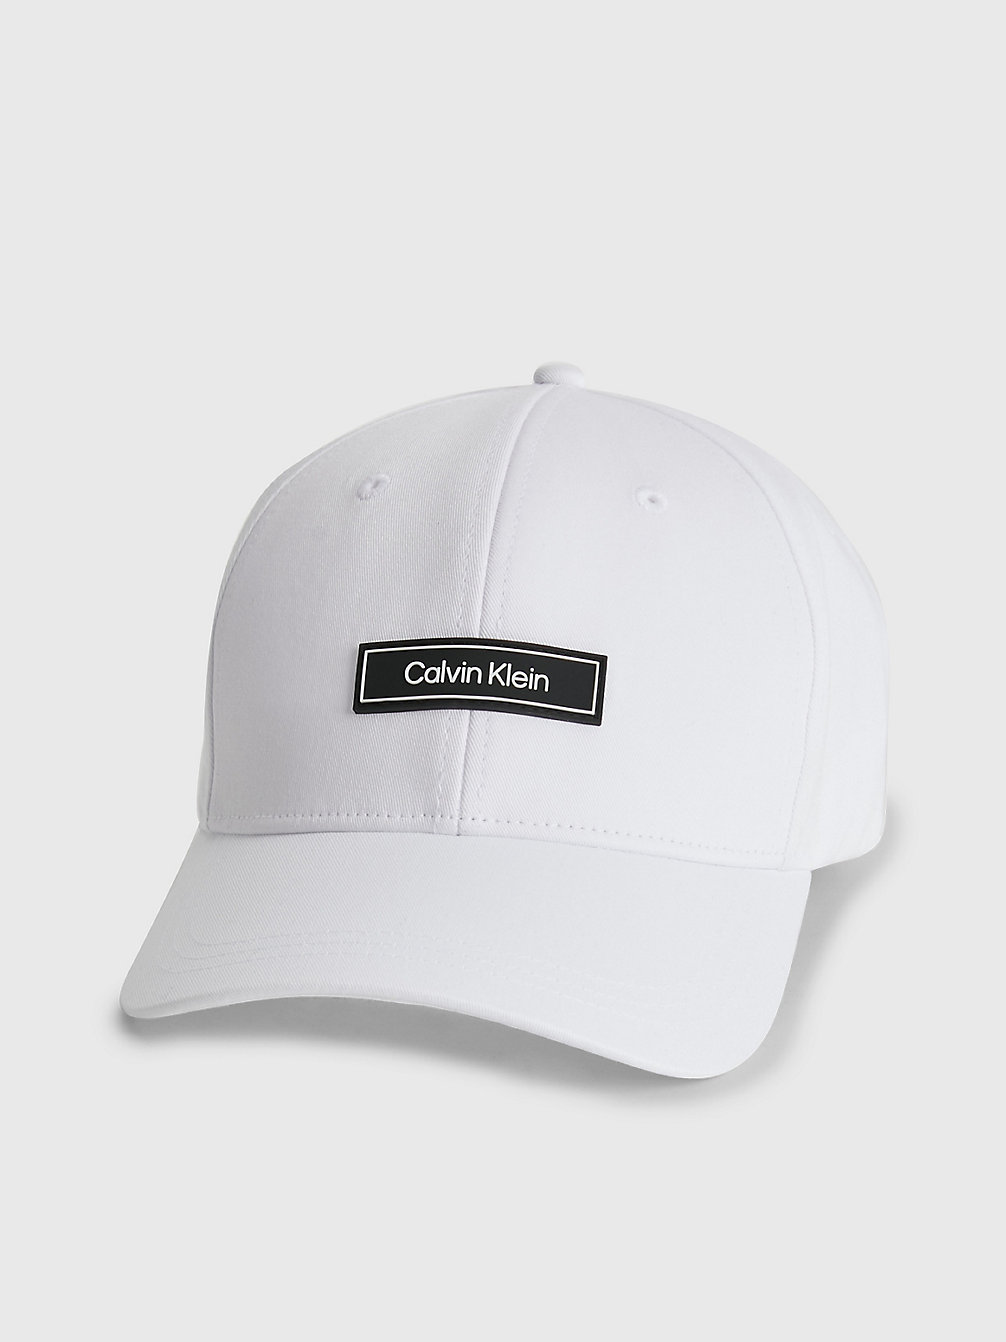 PVH CLASSIC WHITE > Organic Cotton Cap > undefined unisex - Calvin Klein